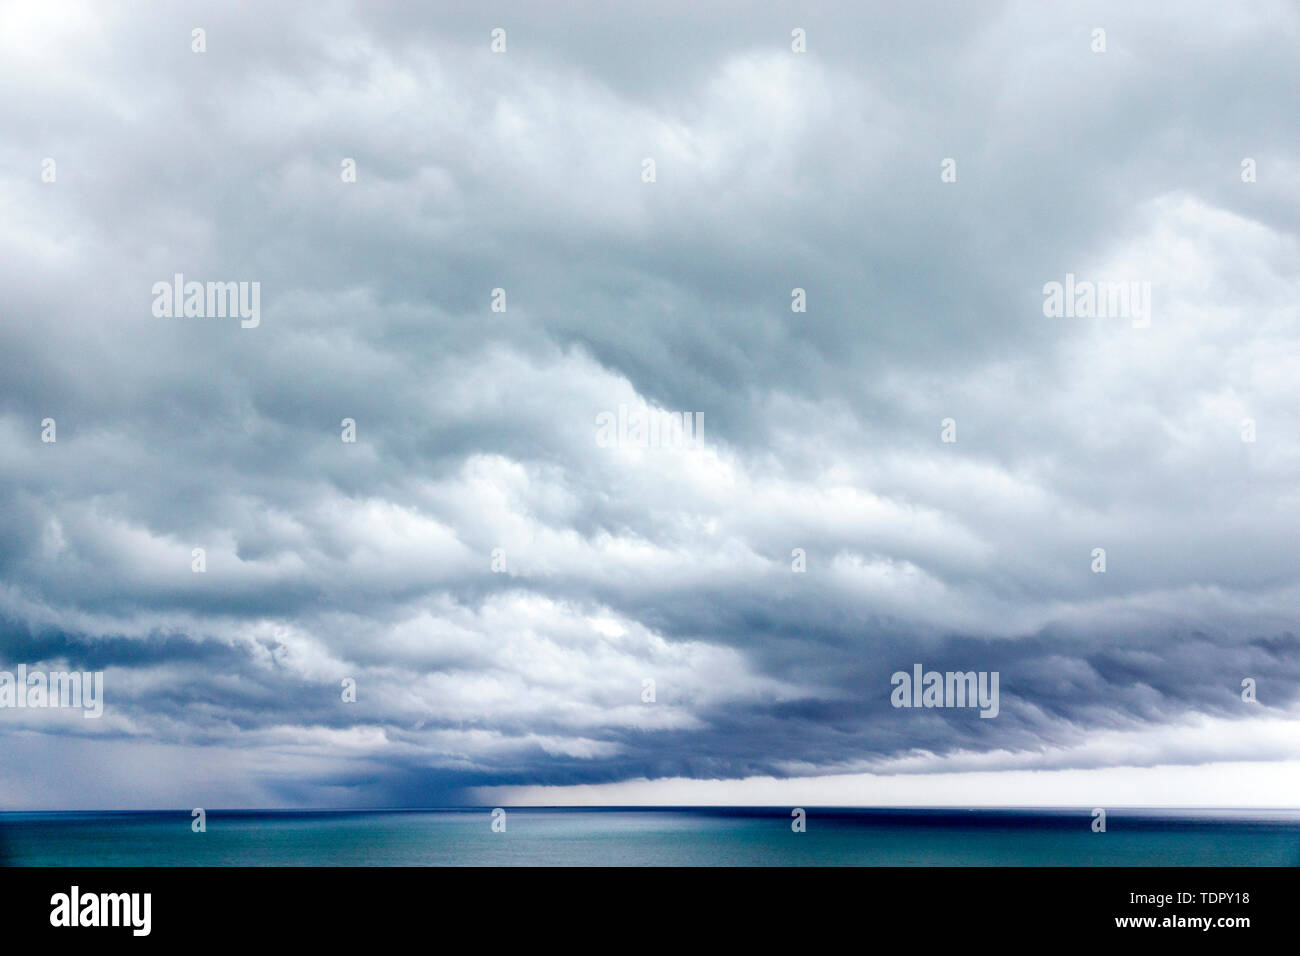 Miami Beach Florida,North Beach,Atlantic Ocean,storm clouds,rain,horizon,menacing sky,FL190505012 Stock Photo